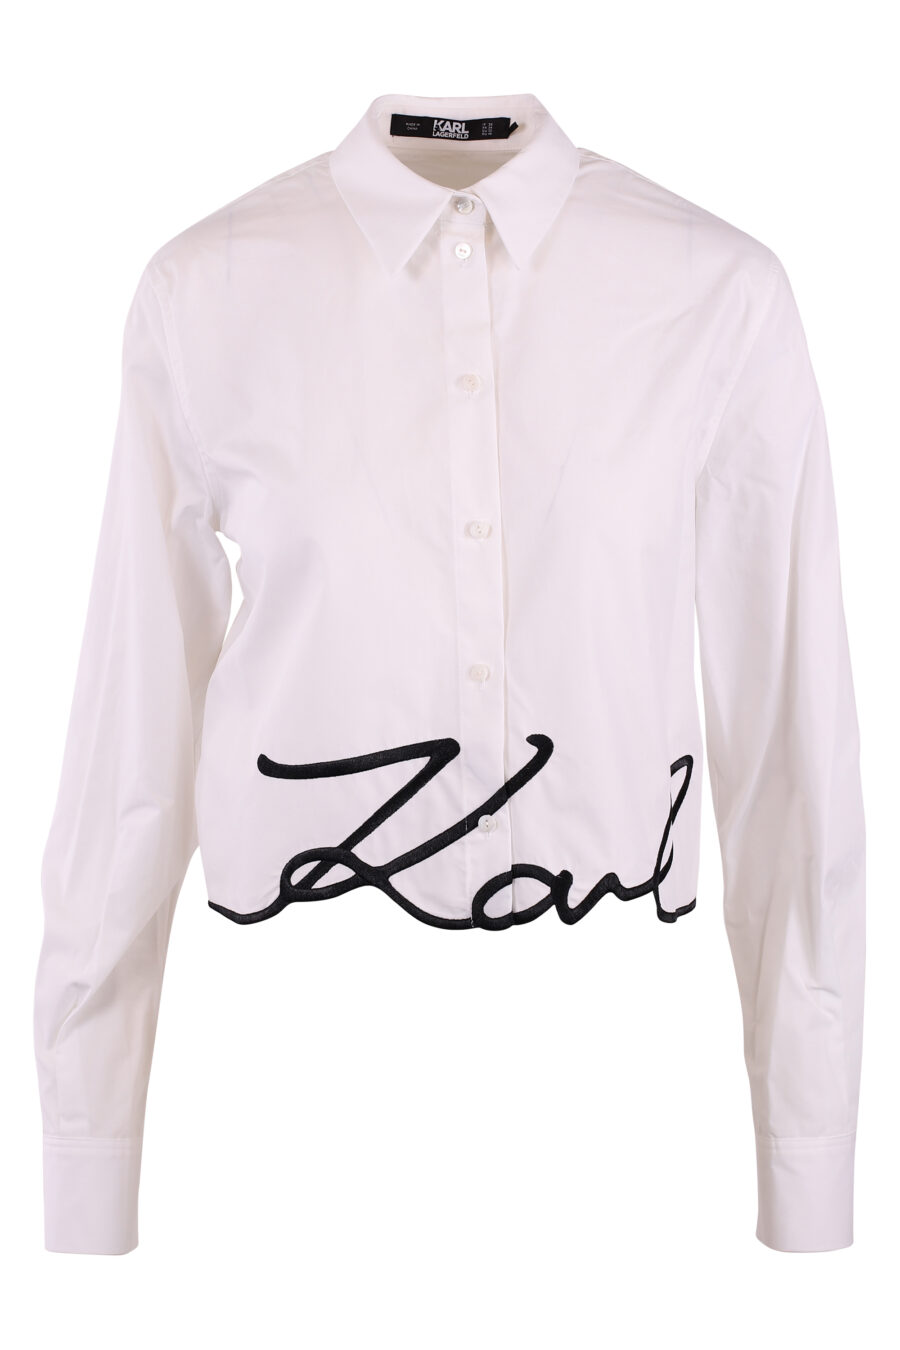 Camisa blanca con maxilogo firma "karl" negro - IMG 6183